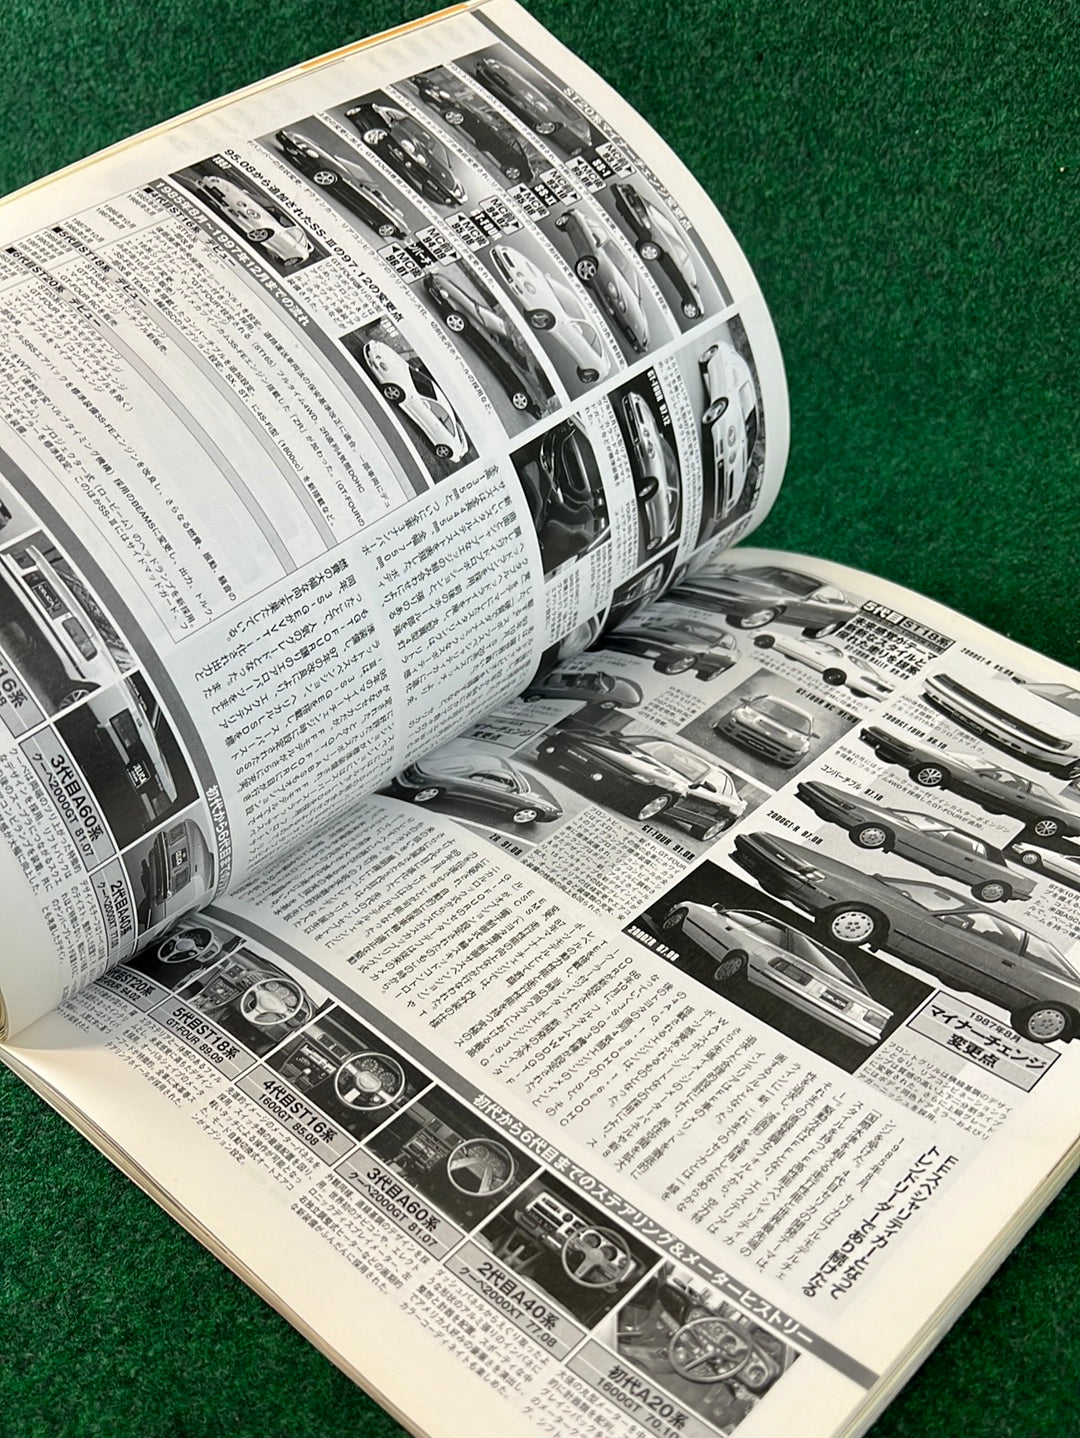 Hyper REV Magazine - Toyota Celica Vol. 87 No. 2